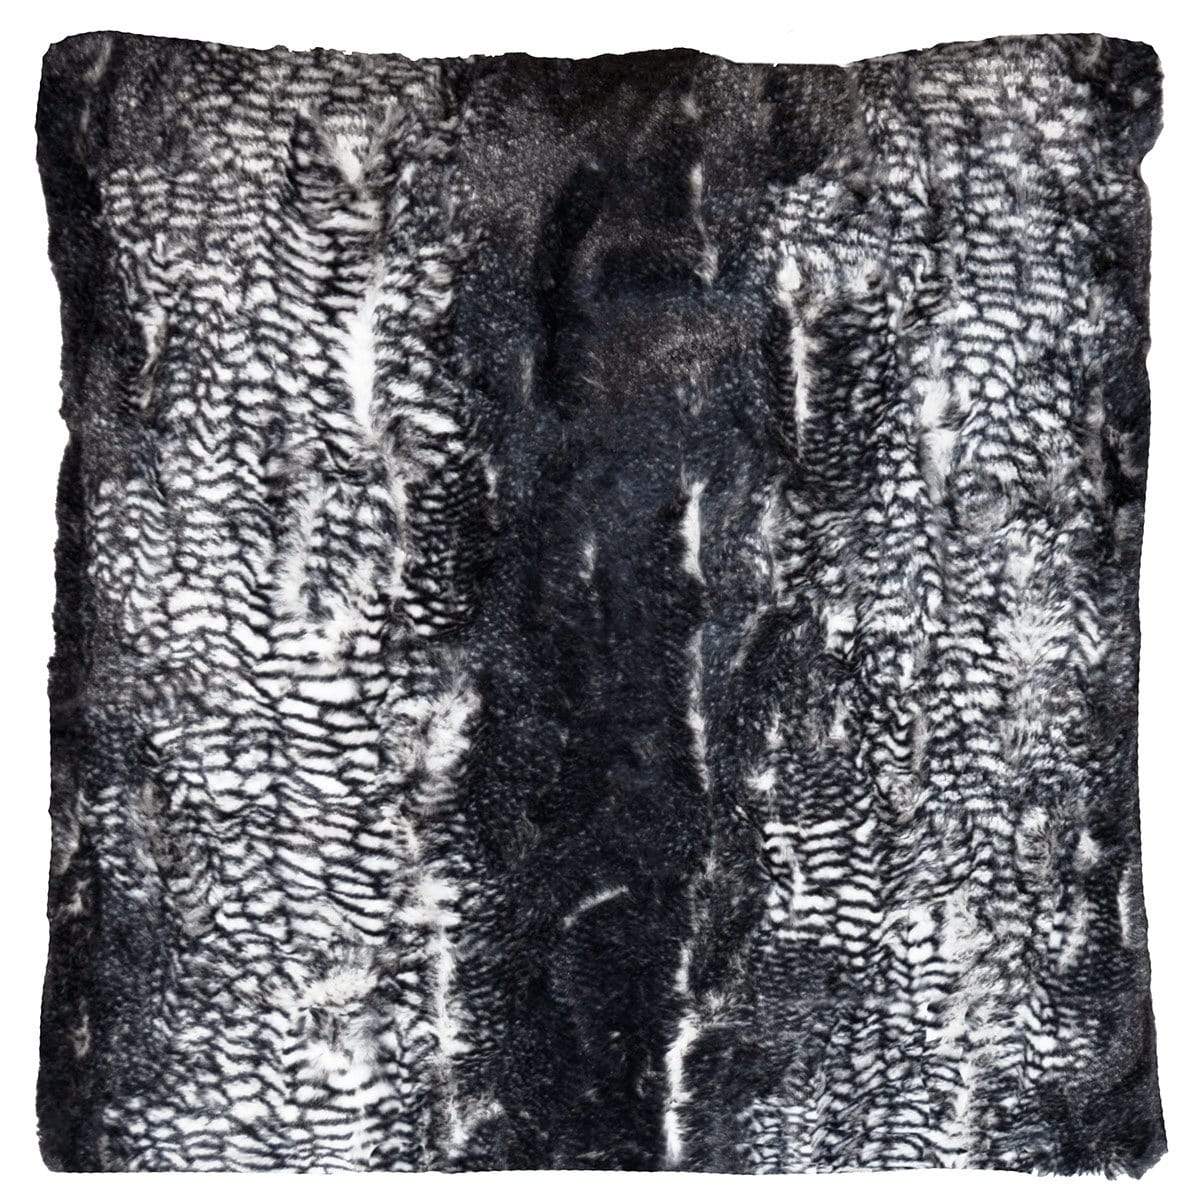 Pillow Shams in Black Mamba; snake print black and White | Luxury Faux Fur decorative pillow | Handmade by Pandemonium Millinery